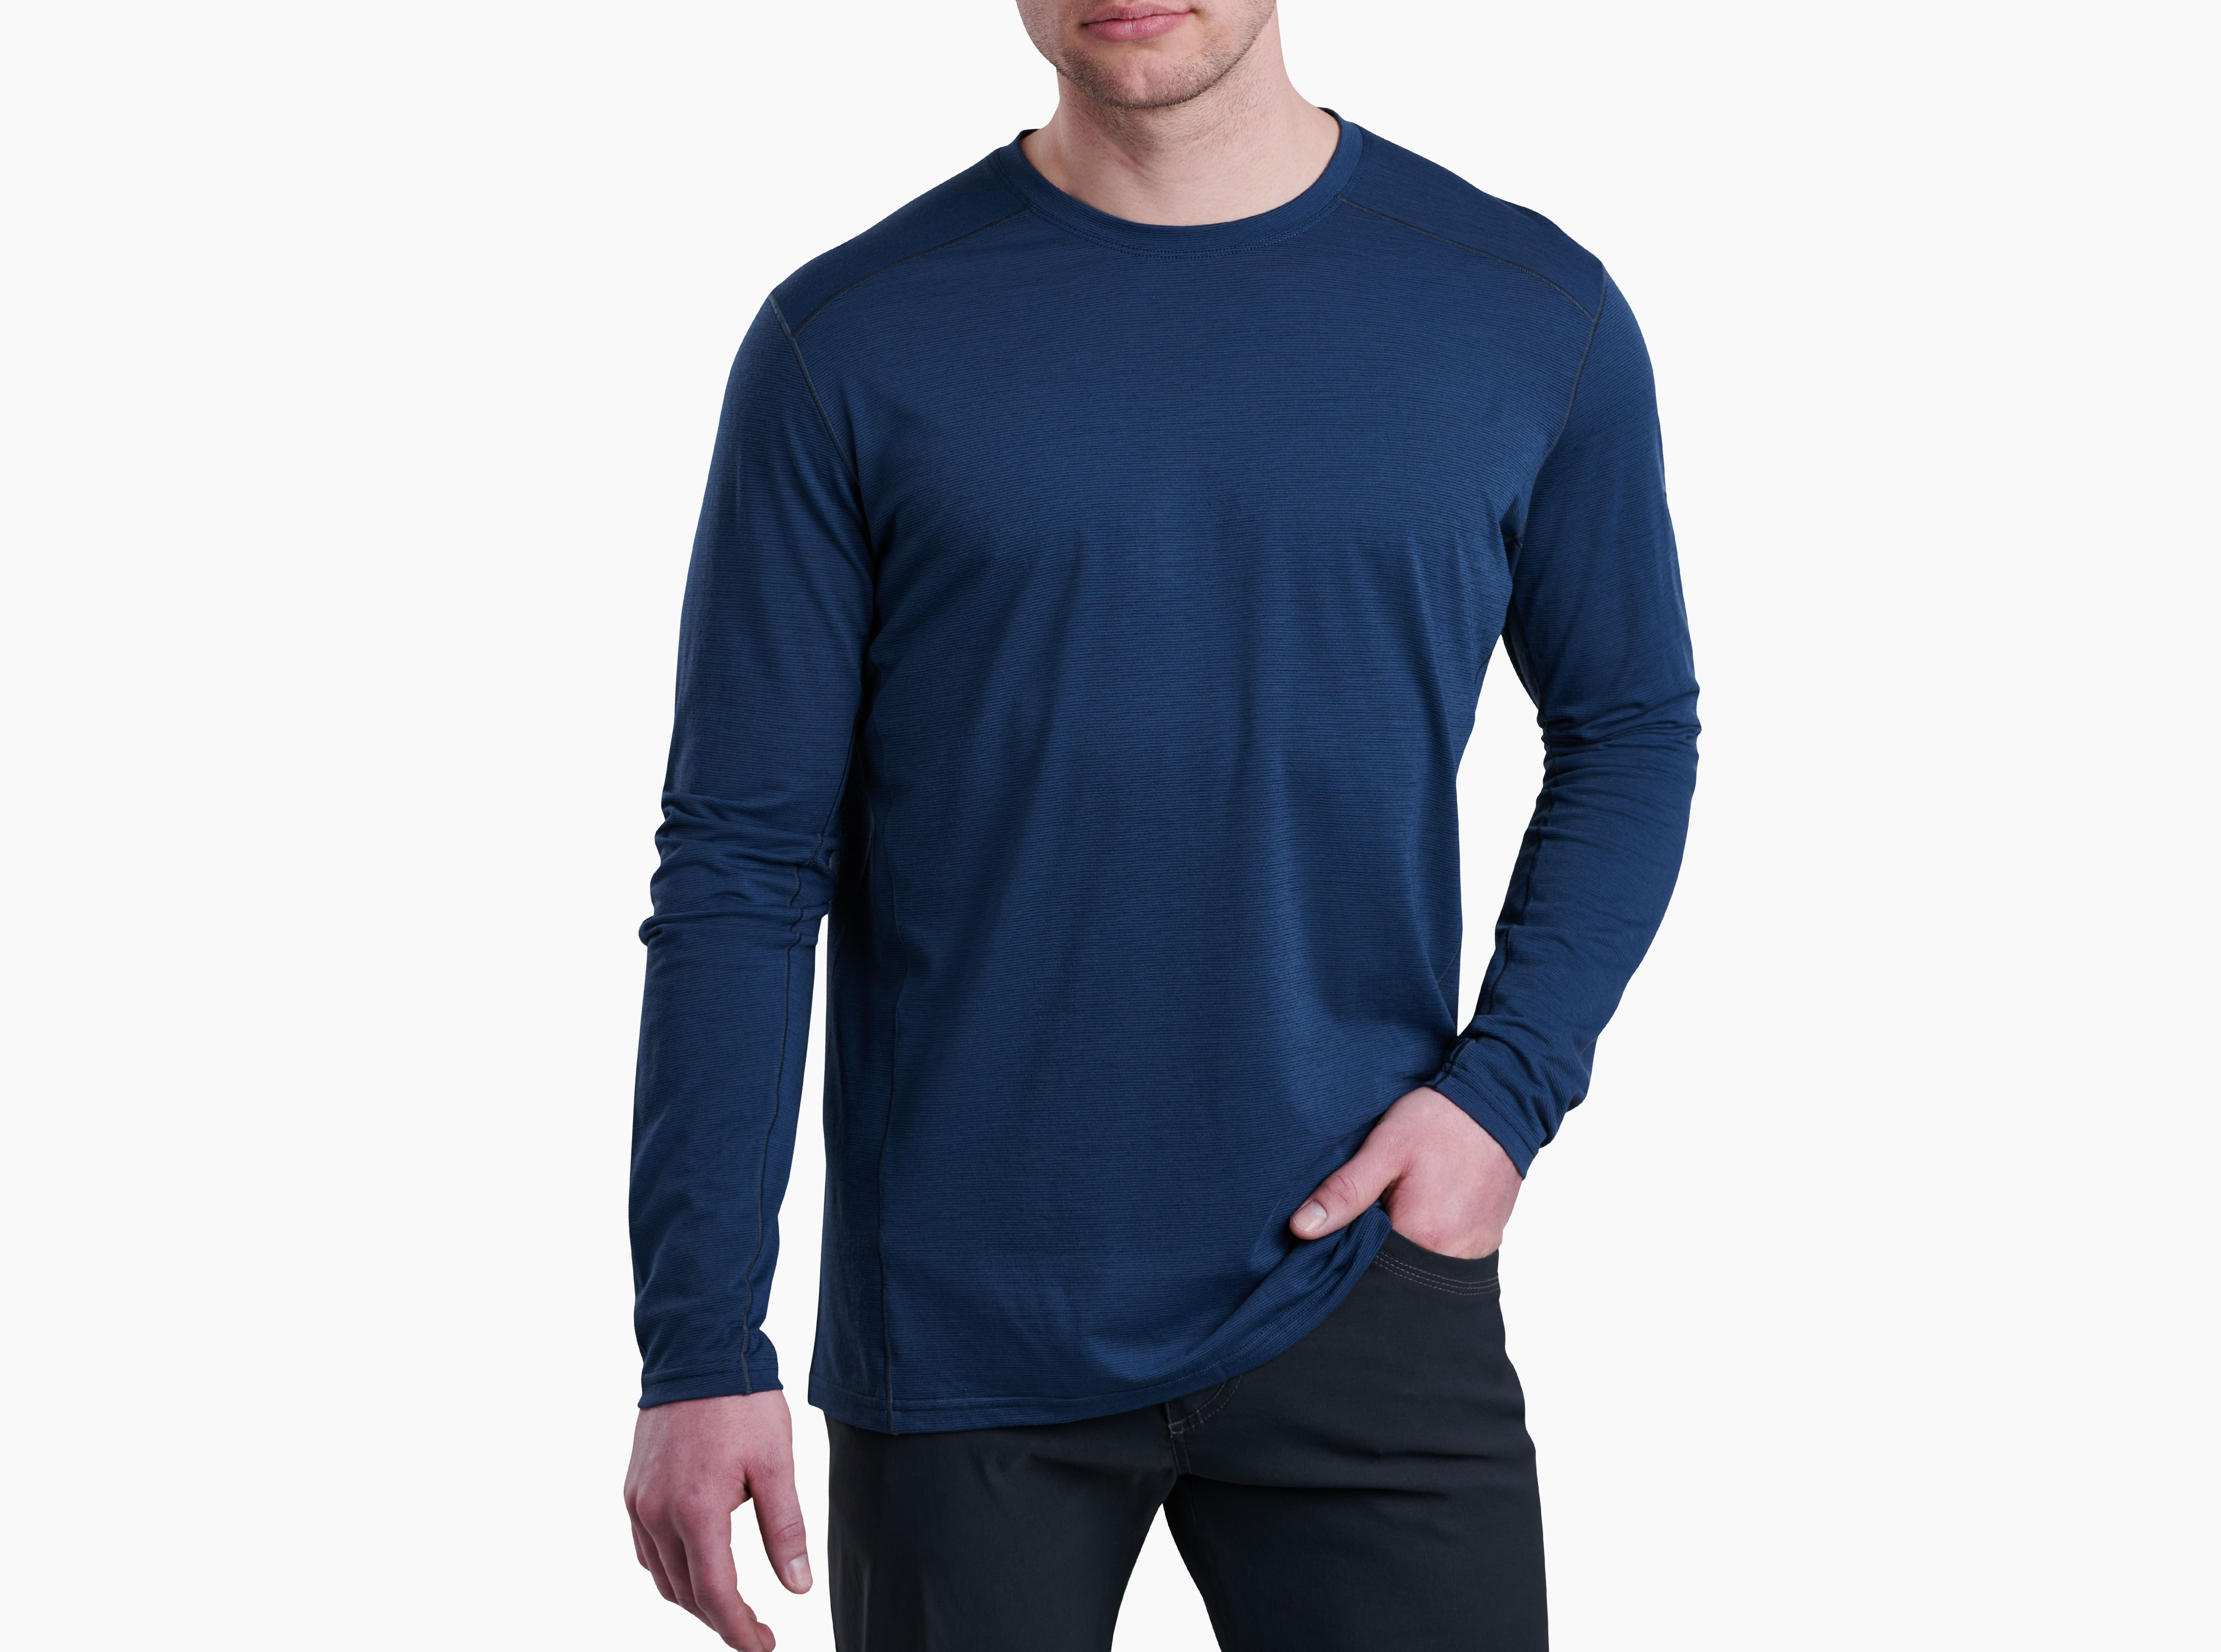 Valiant™ in Men's Long Sleeve | KÜHL Clothing